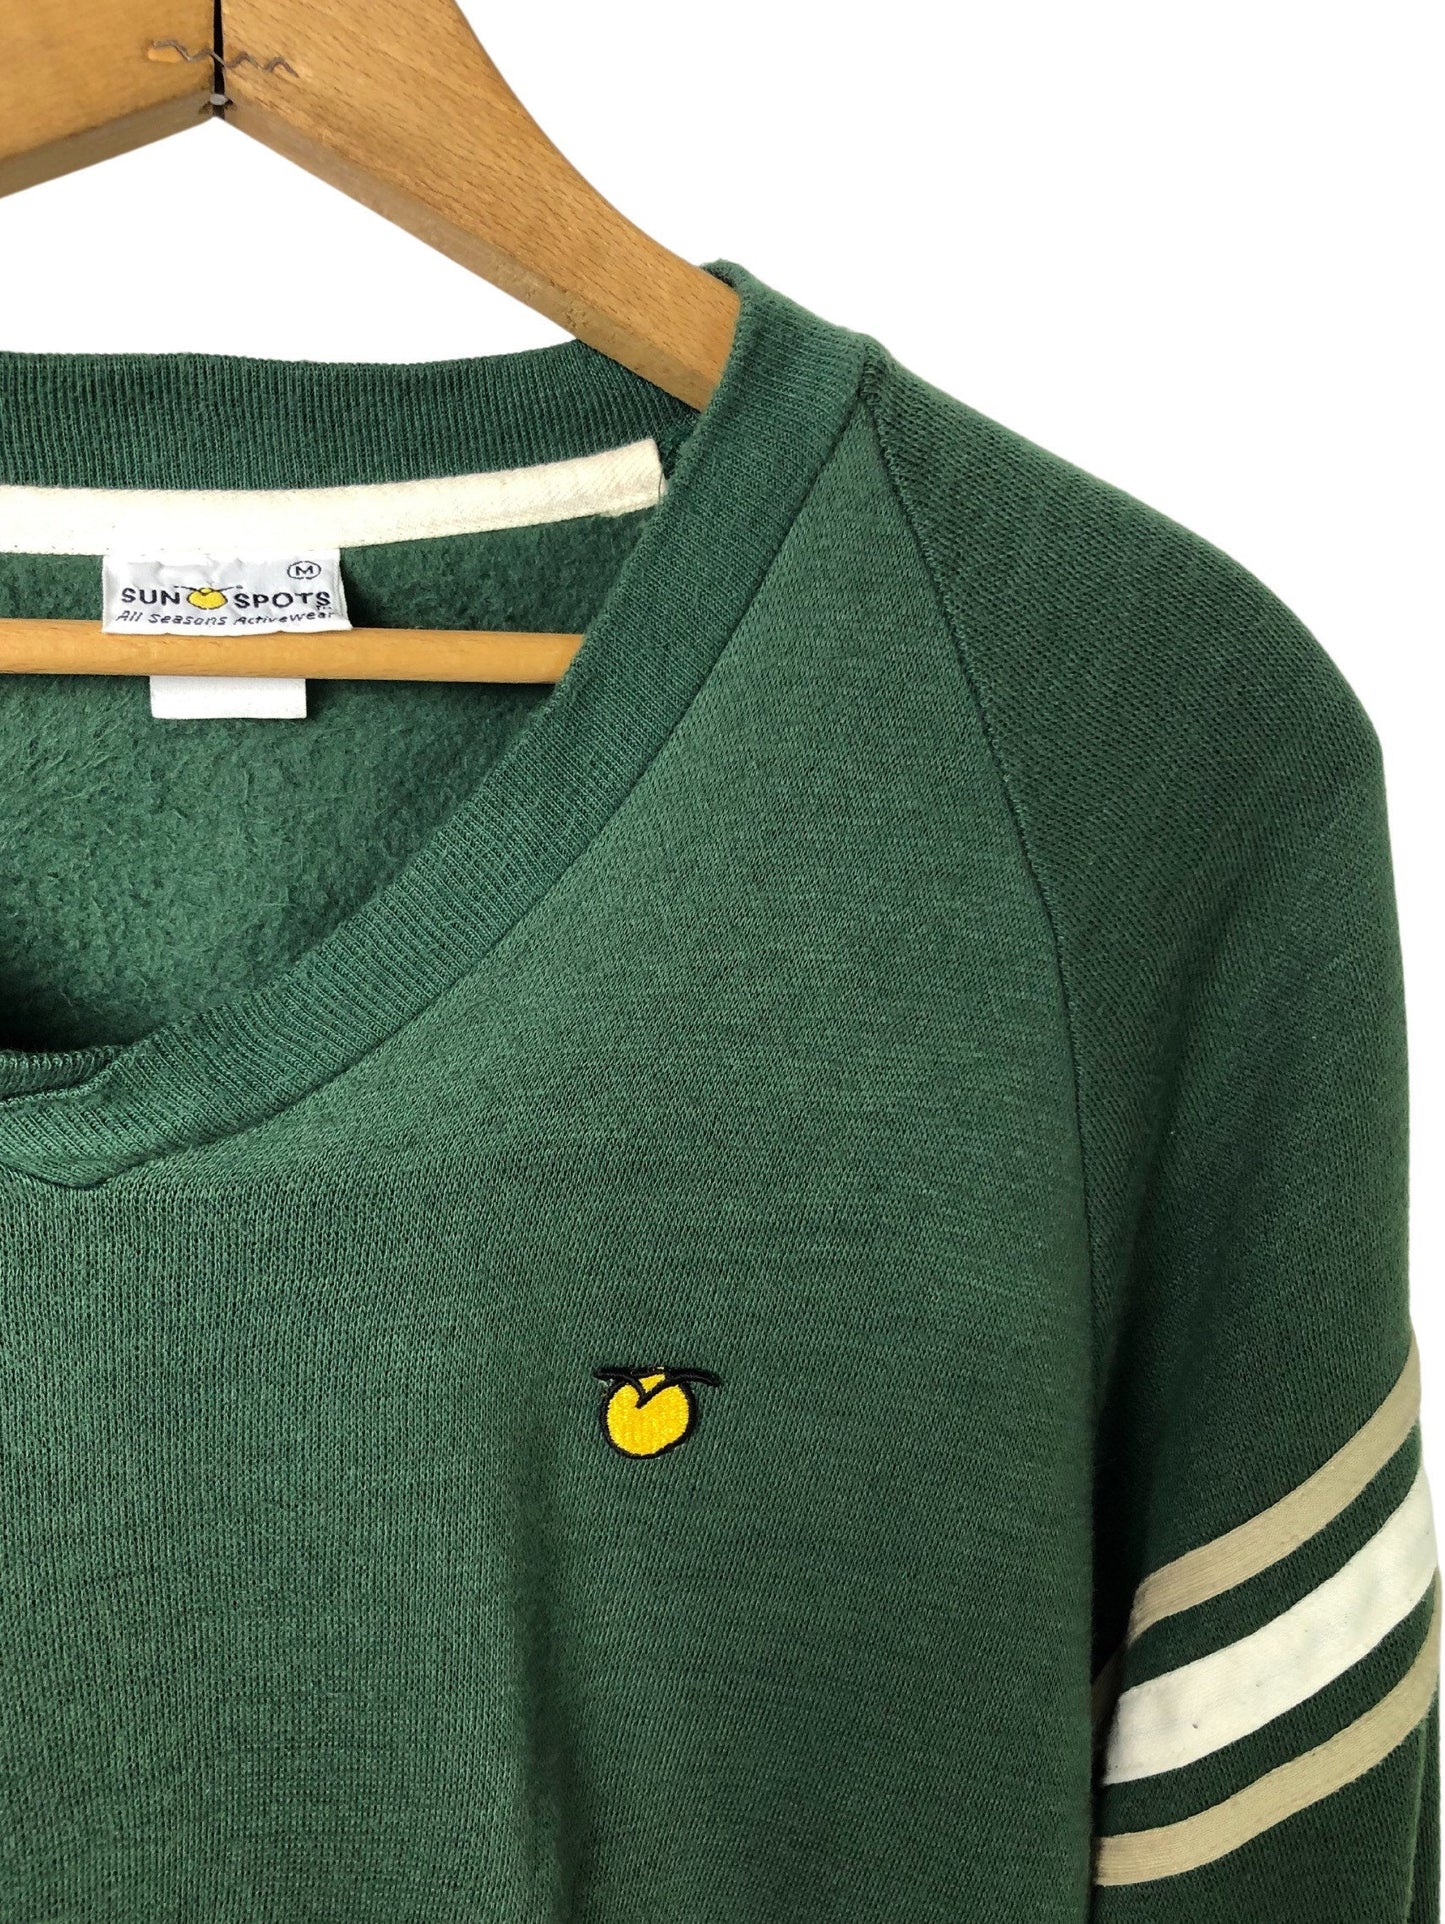 80’s Sun Spots Plain Green V-Neck Striped Retro Raglan Sweatshirt Pullover Size Medium